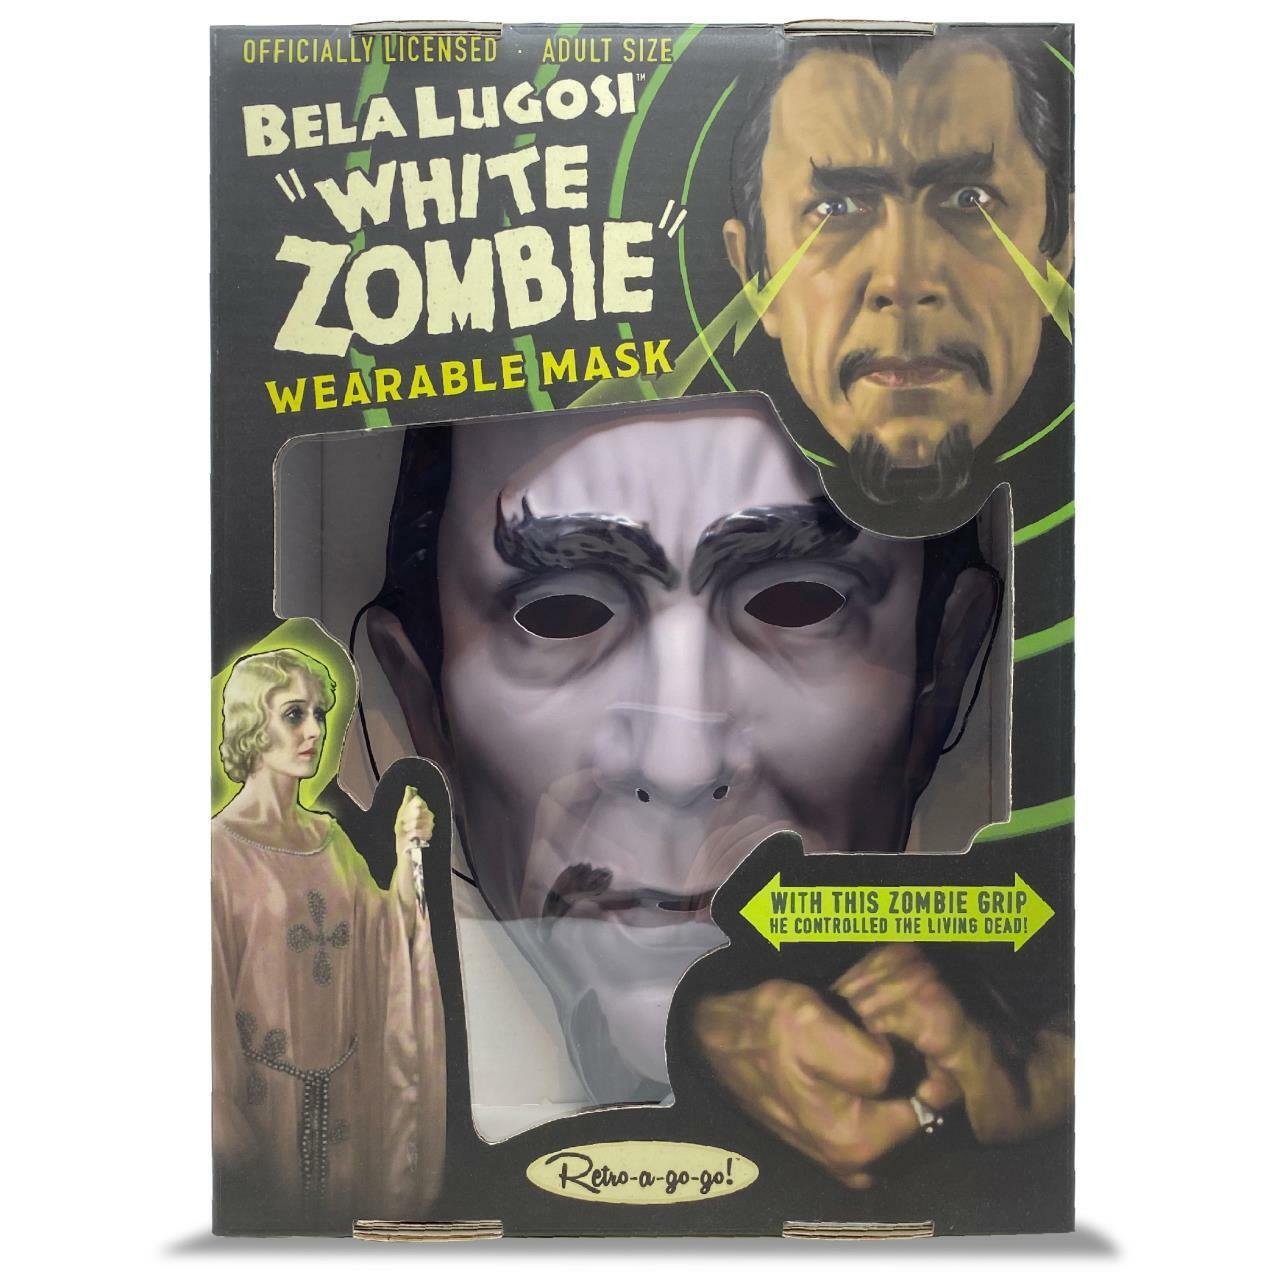 Retro-a-go-go! - Bela Lugosi "White Zombie" Wearable - Midnight Movie